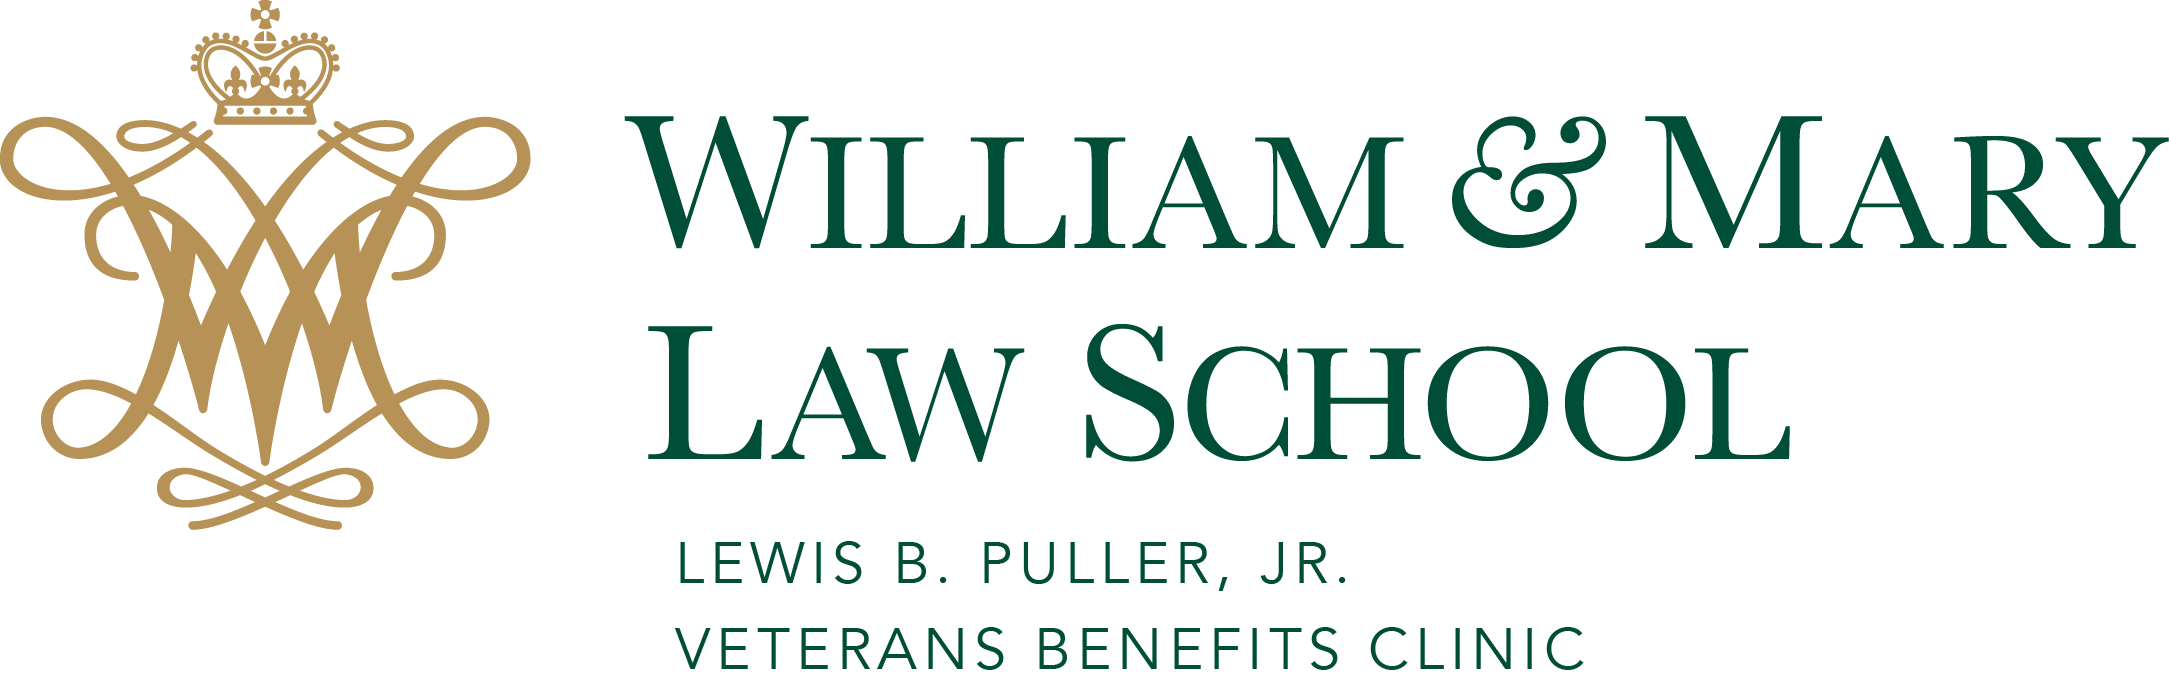 Lewis B. Puller, Jr. Veterans Benefits Clinic